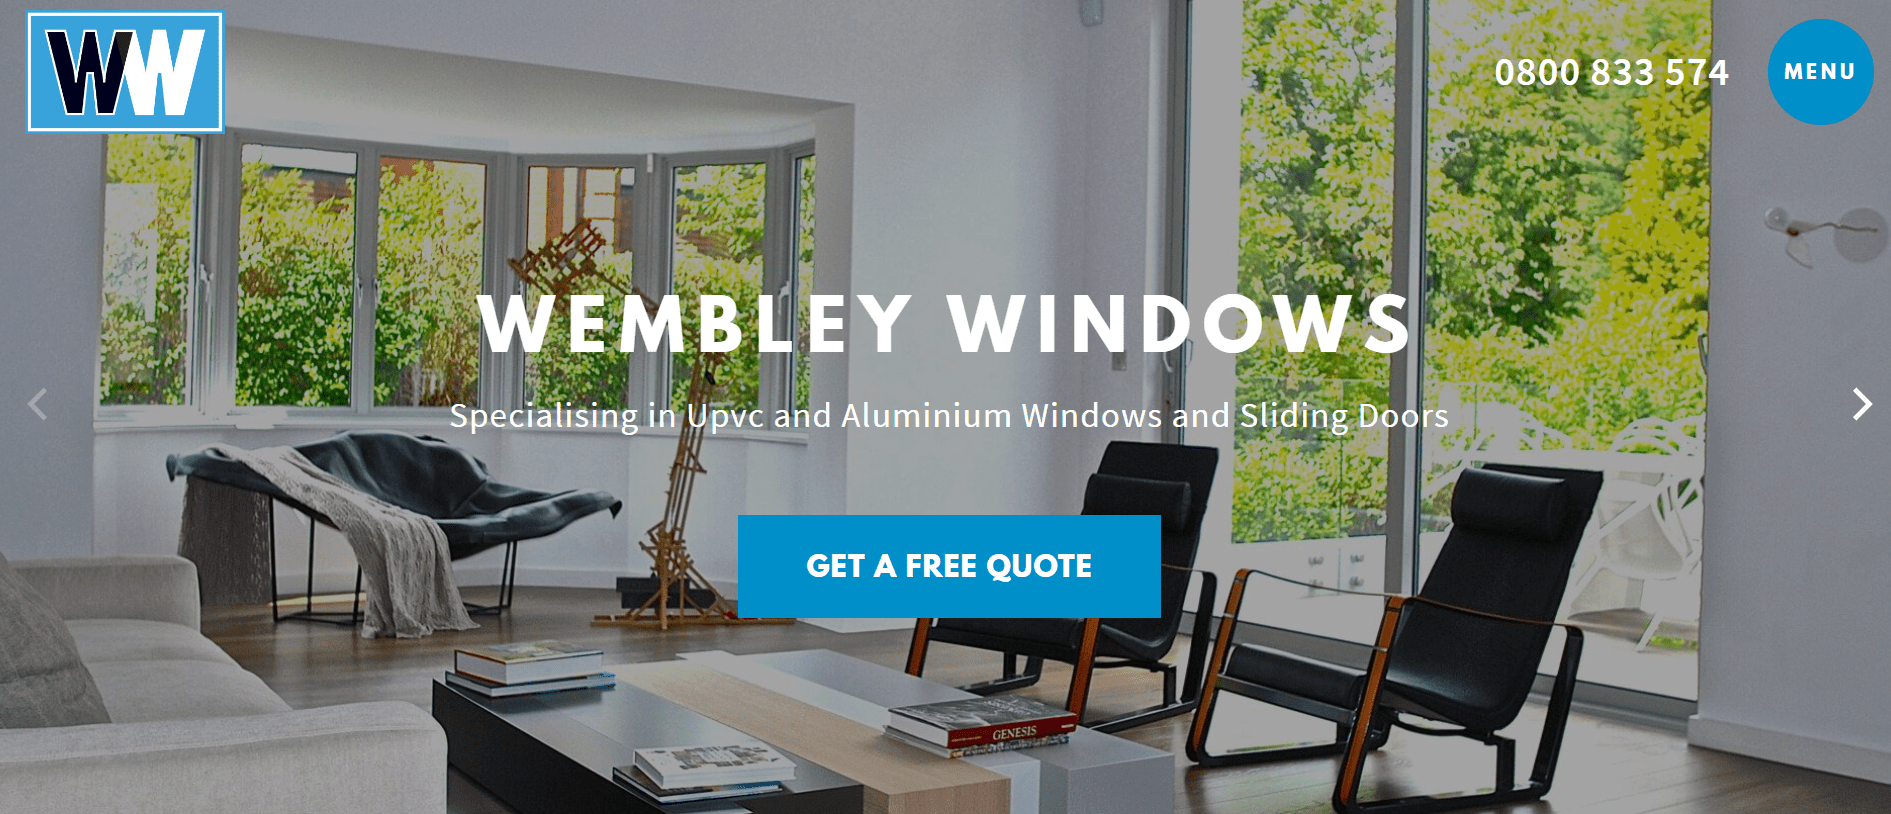 Wembley Windows Ltd